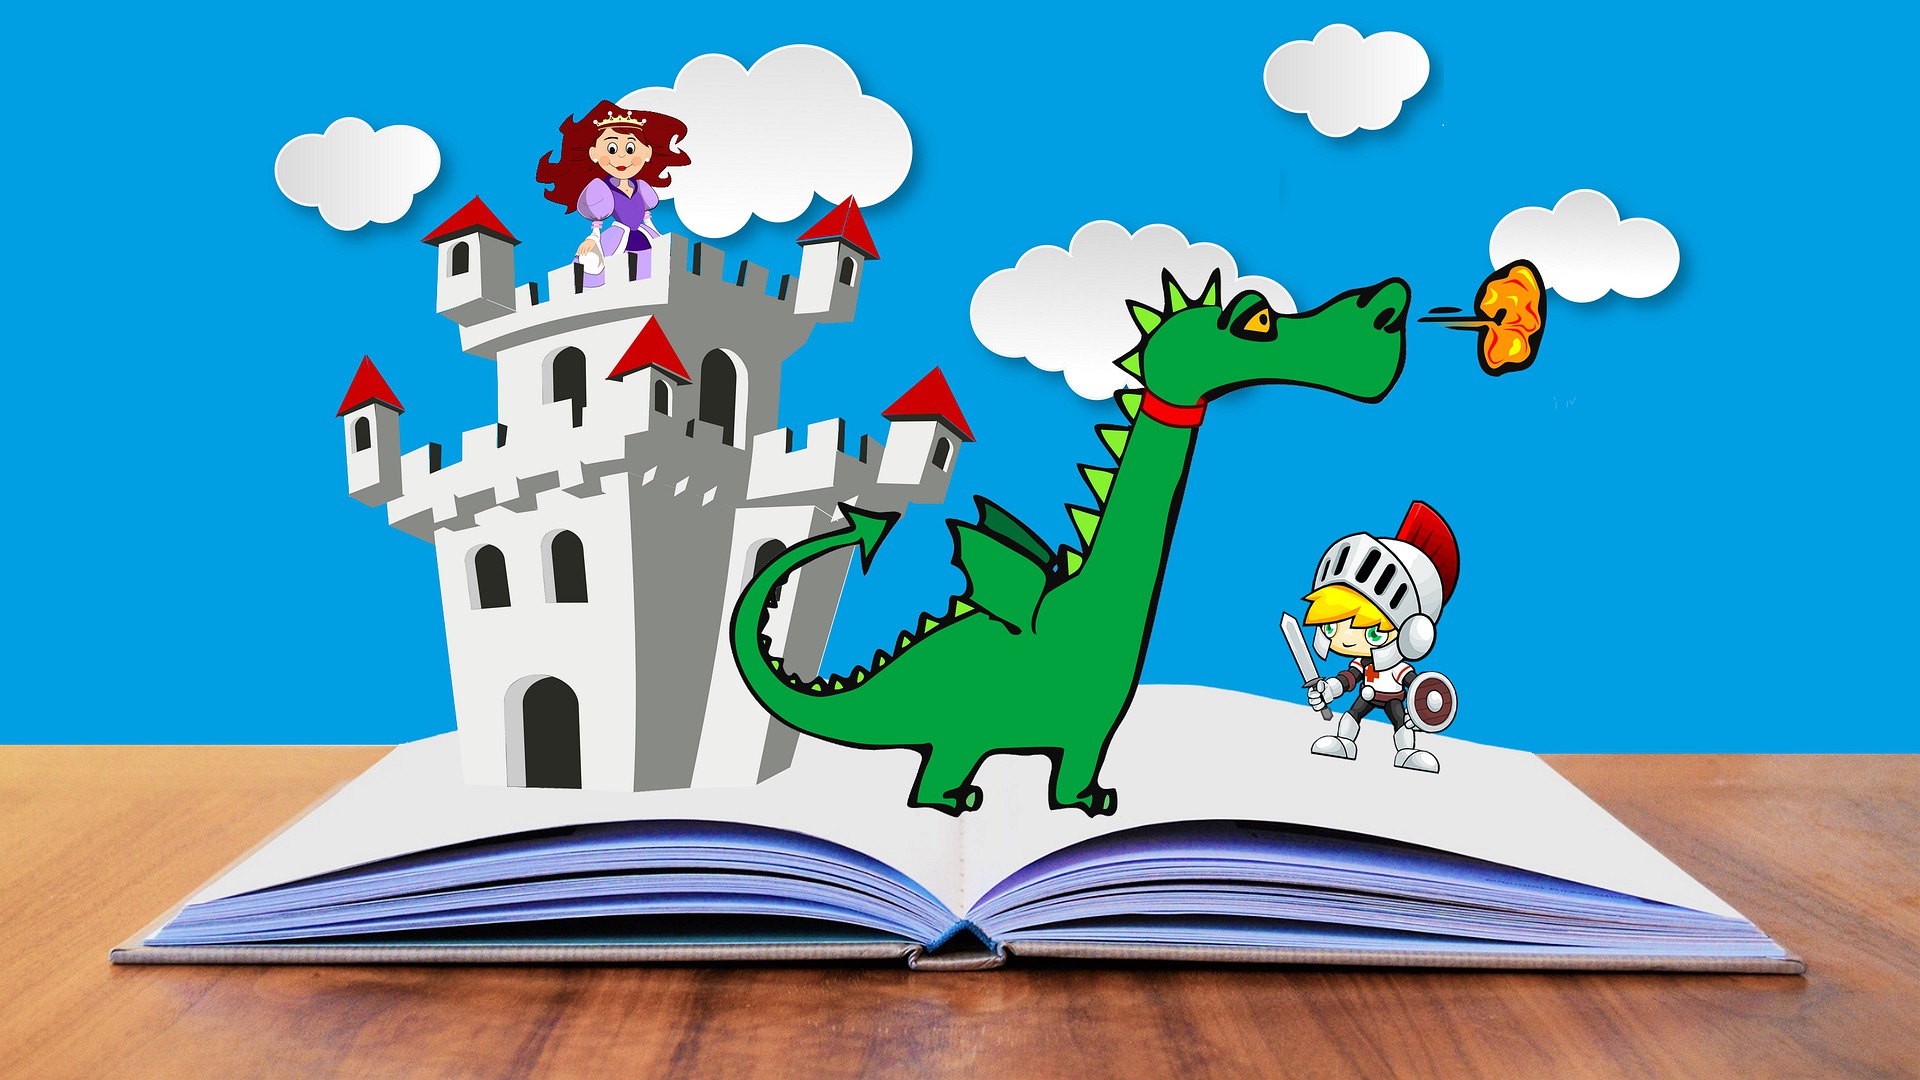 Book with castle and dragon.  Image courtesy of Tumisu and Pixabay